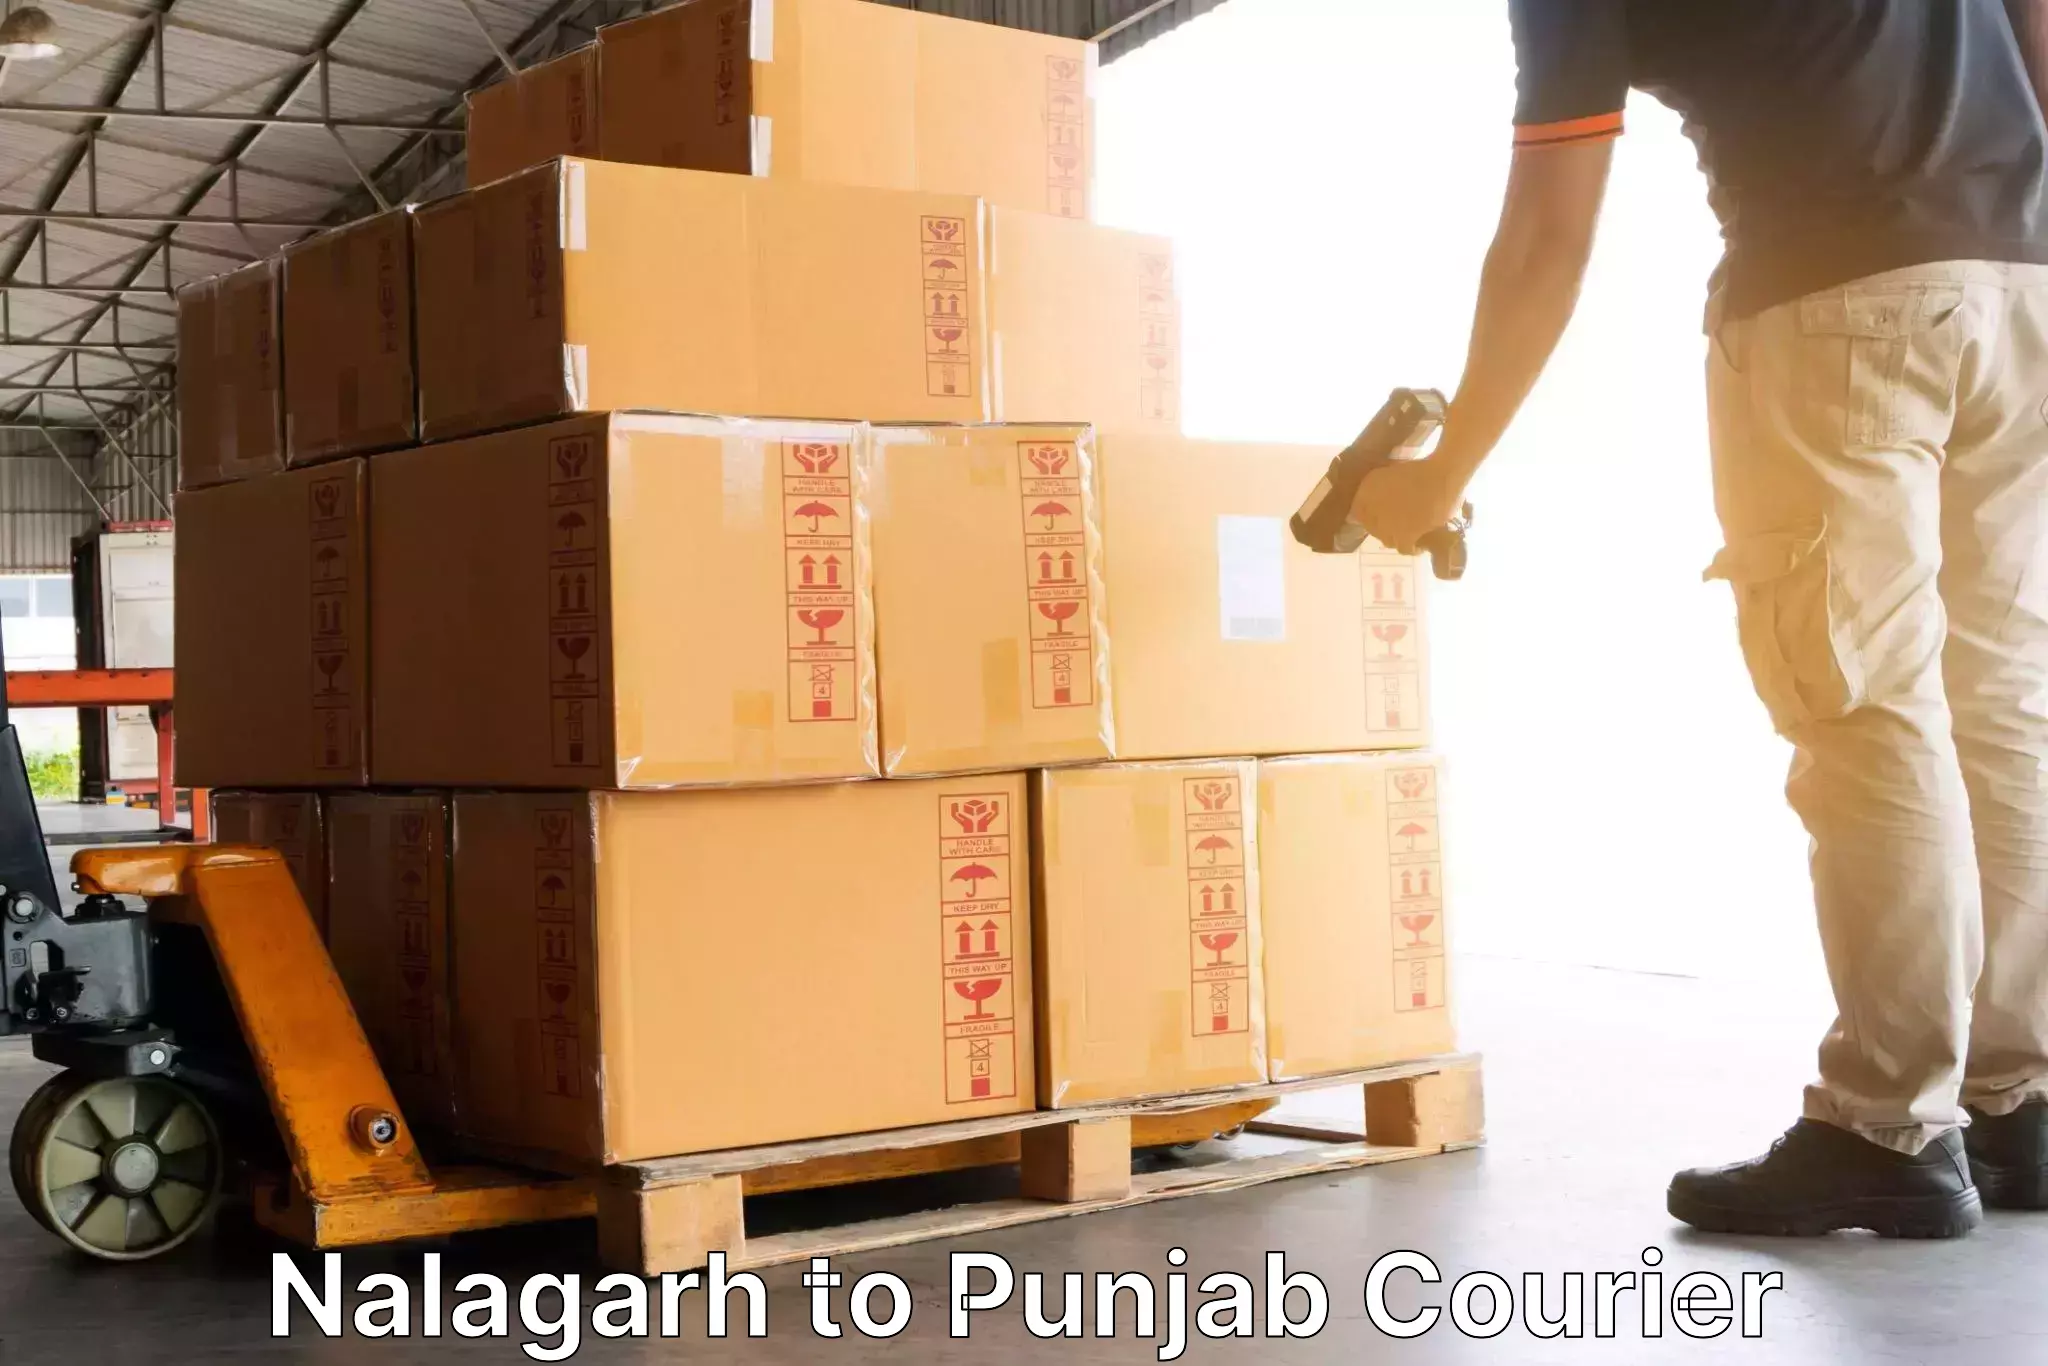 Parcel handling and care Nalagarh to Punjab